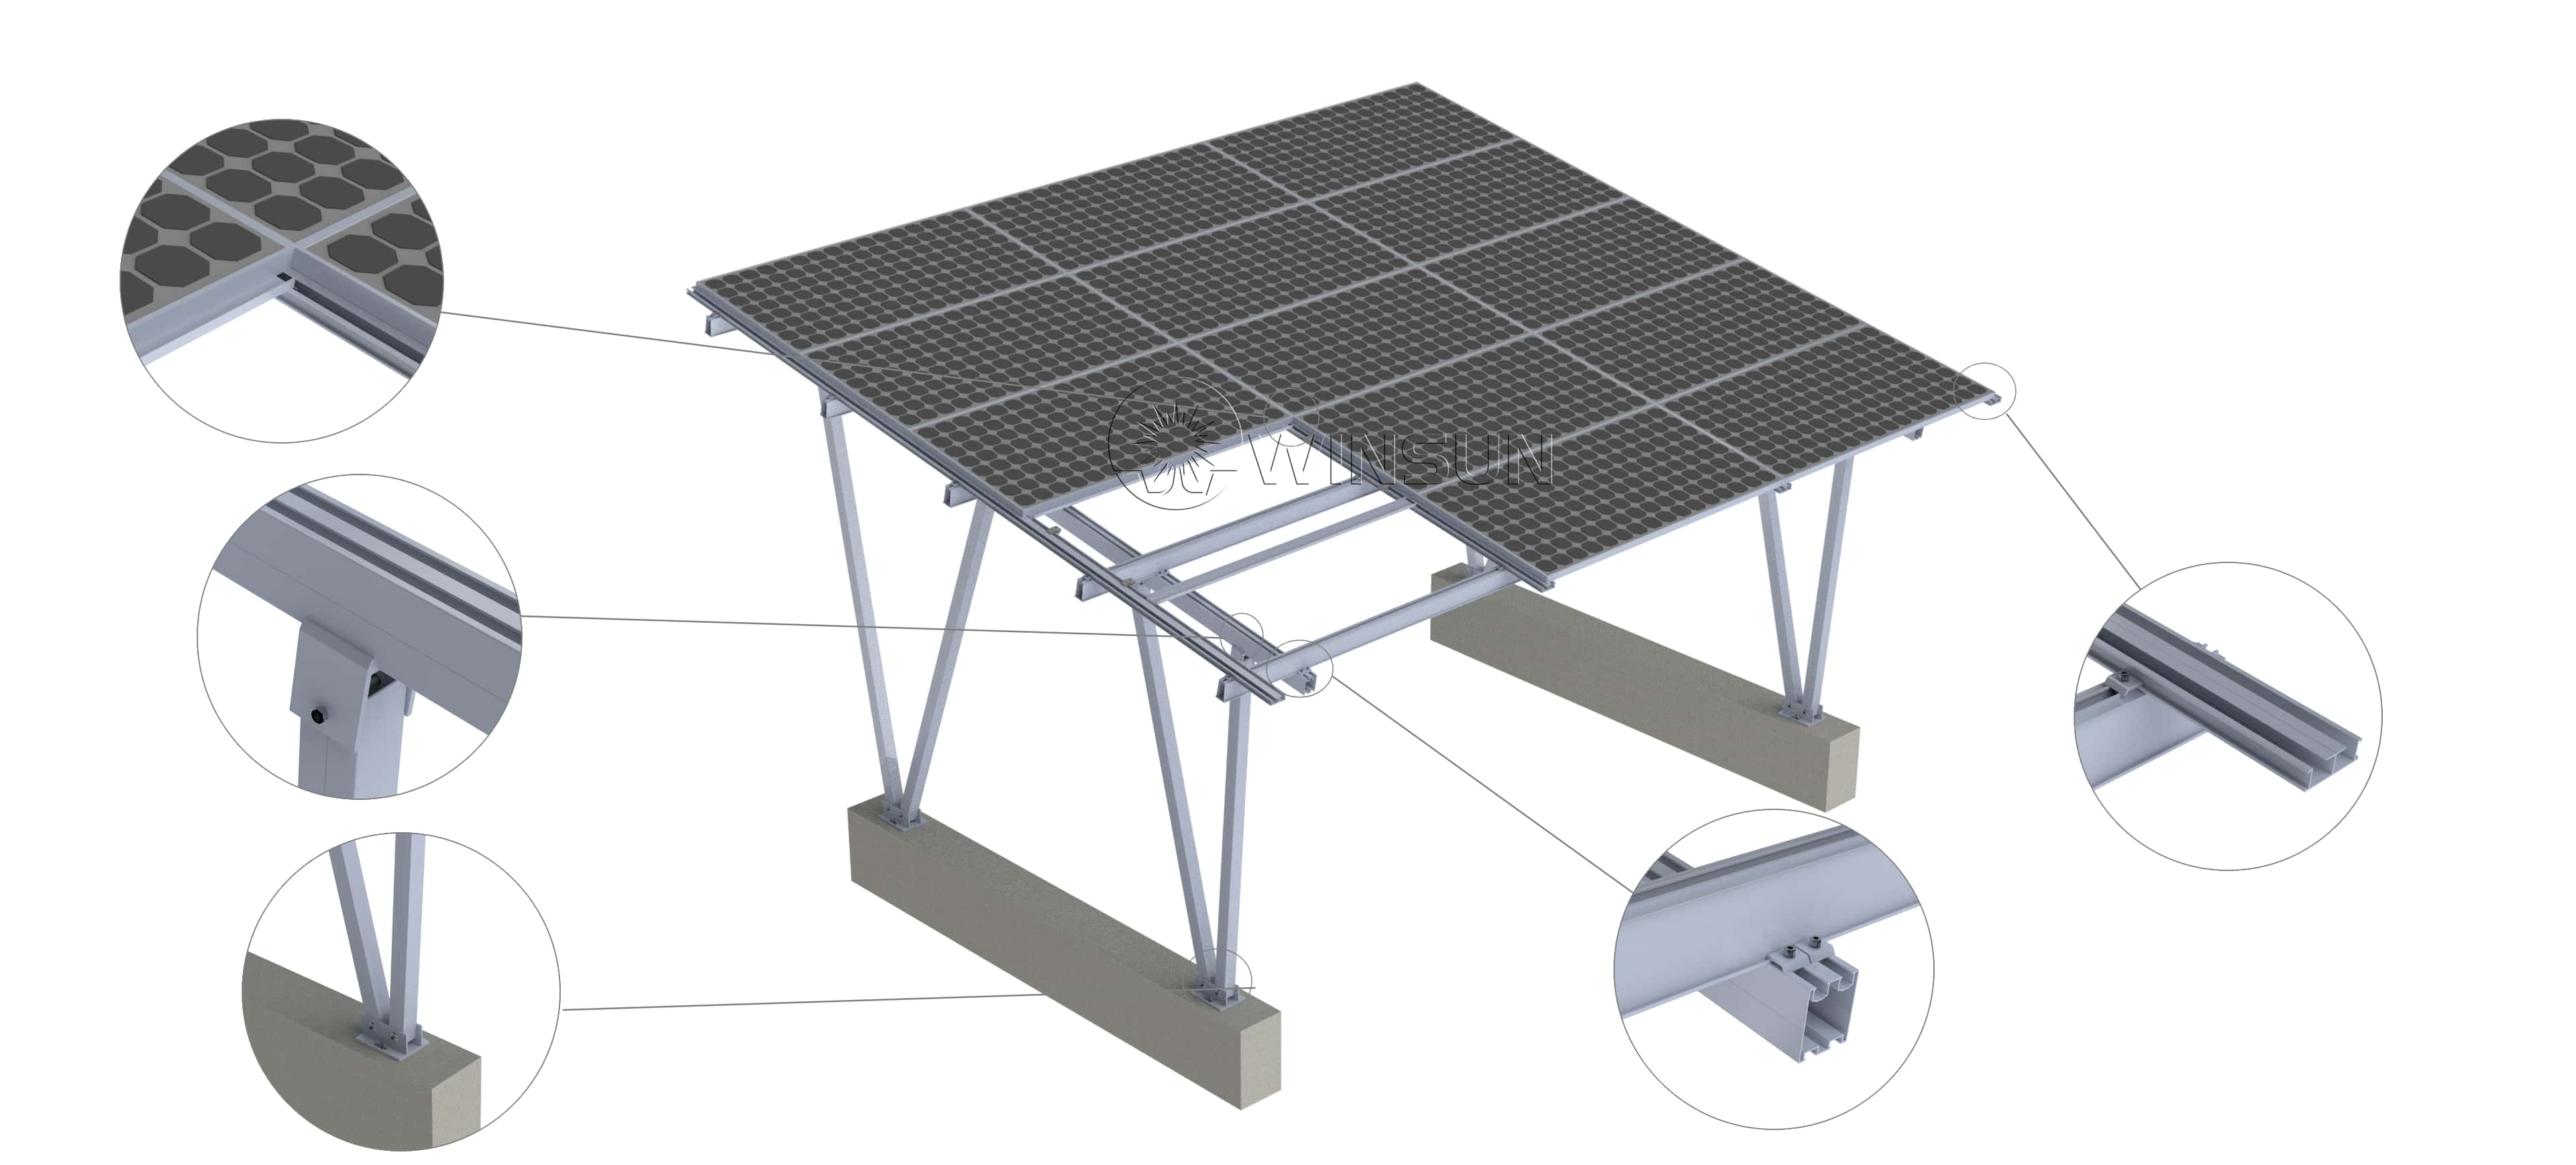 solar panel carport mounting structure